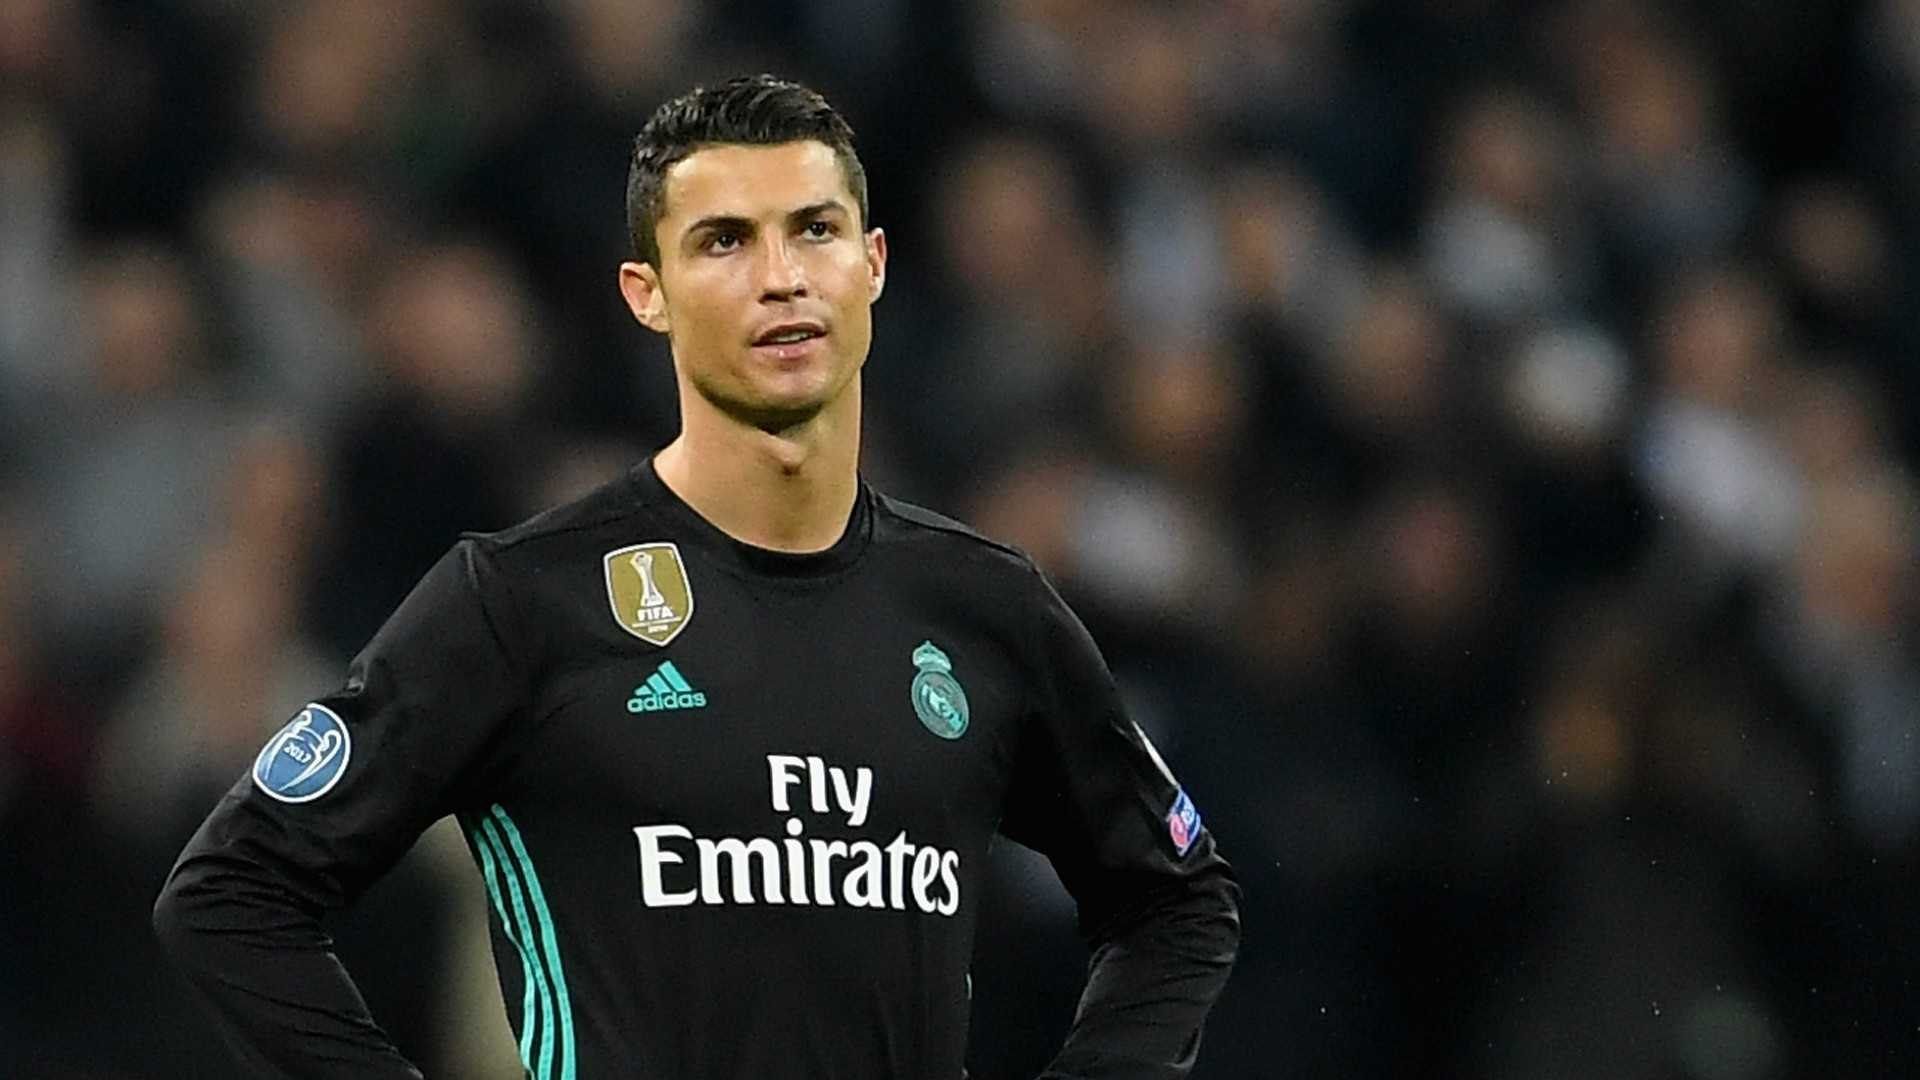 Cristiano Ronaldo Full HD Image 2018